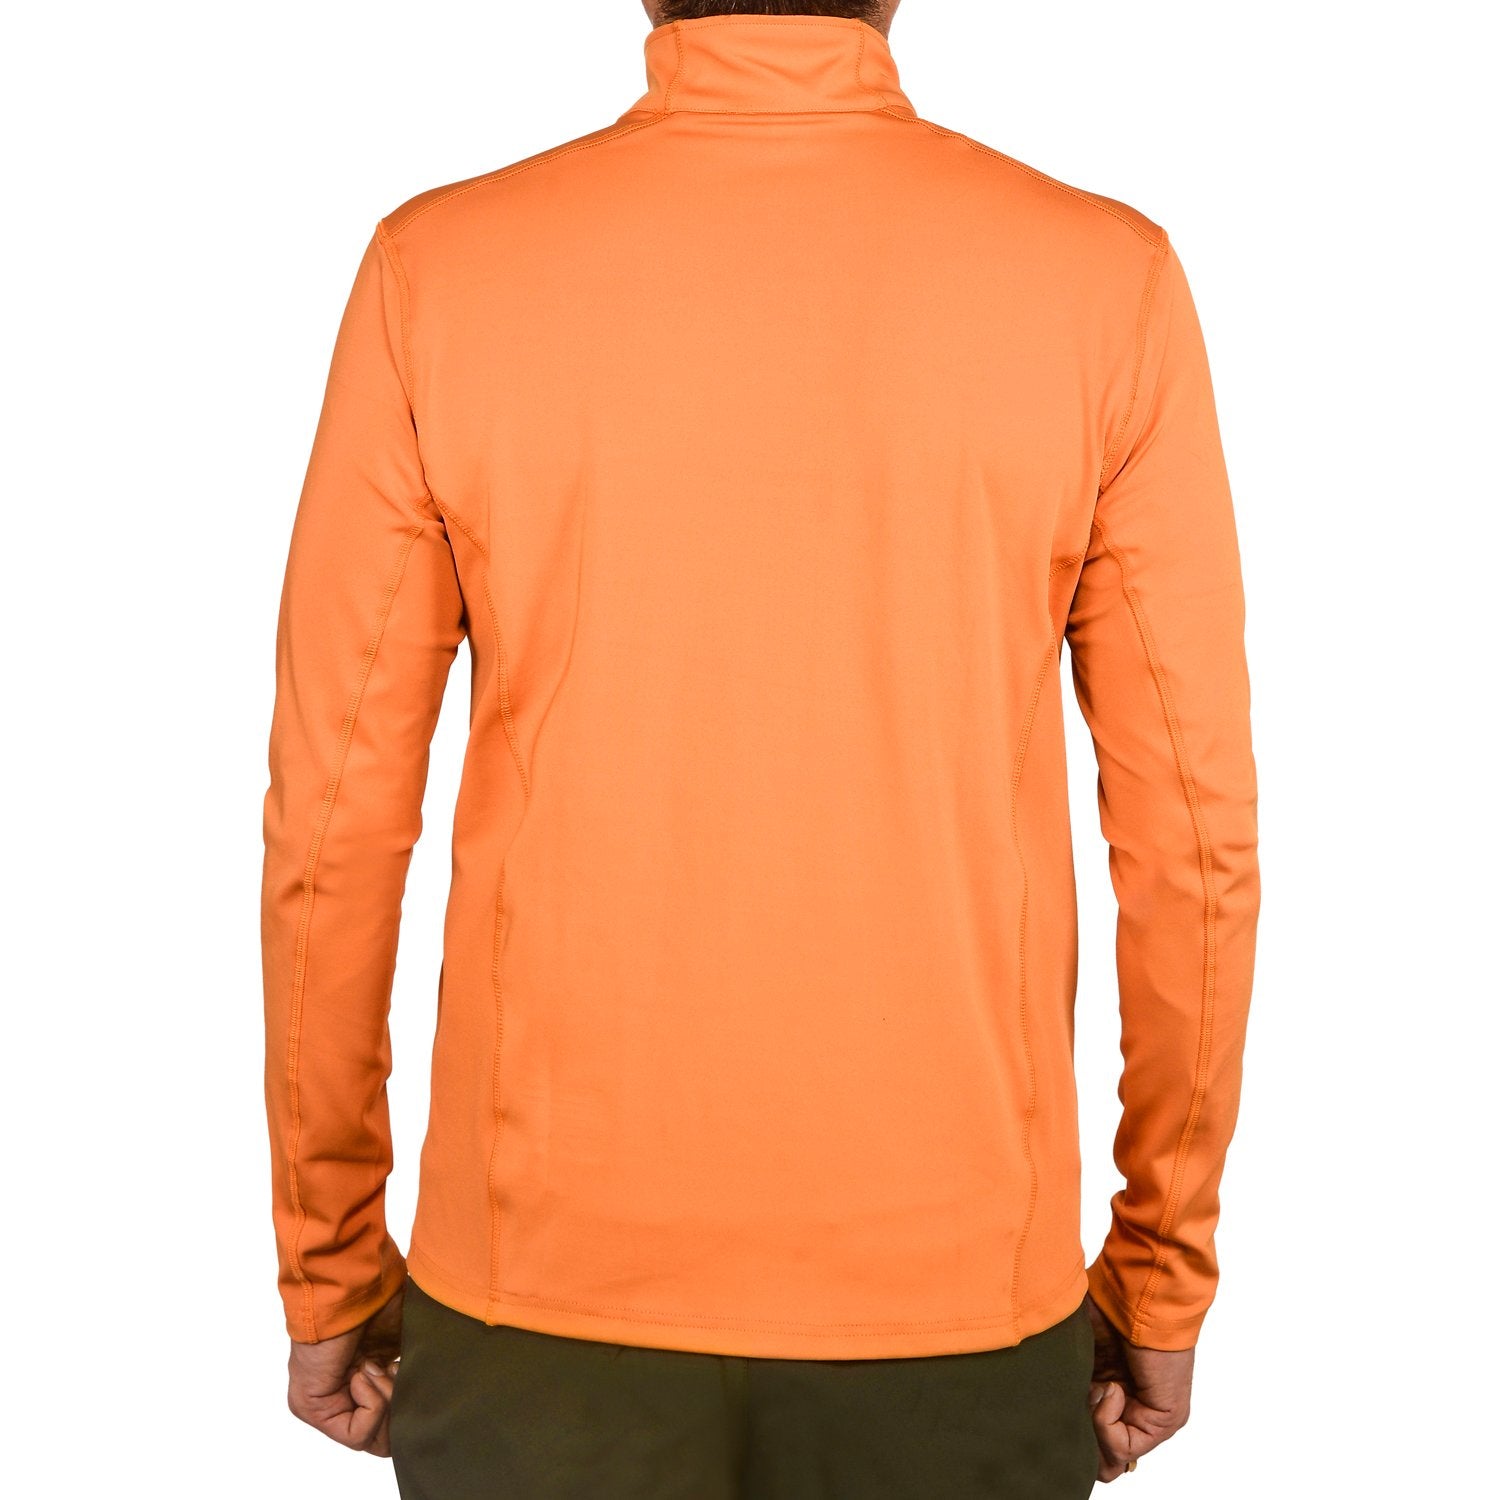 Buy Gokyo K2 Ultrasoft Trekking Tshirt | Trekking & Hiking T-shirts at Gokyo Outdoor Clothing & Gear